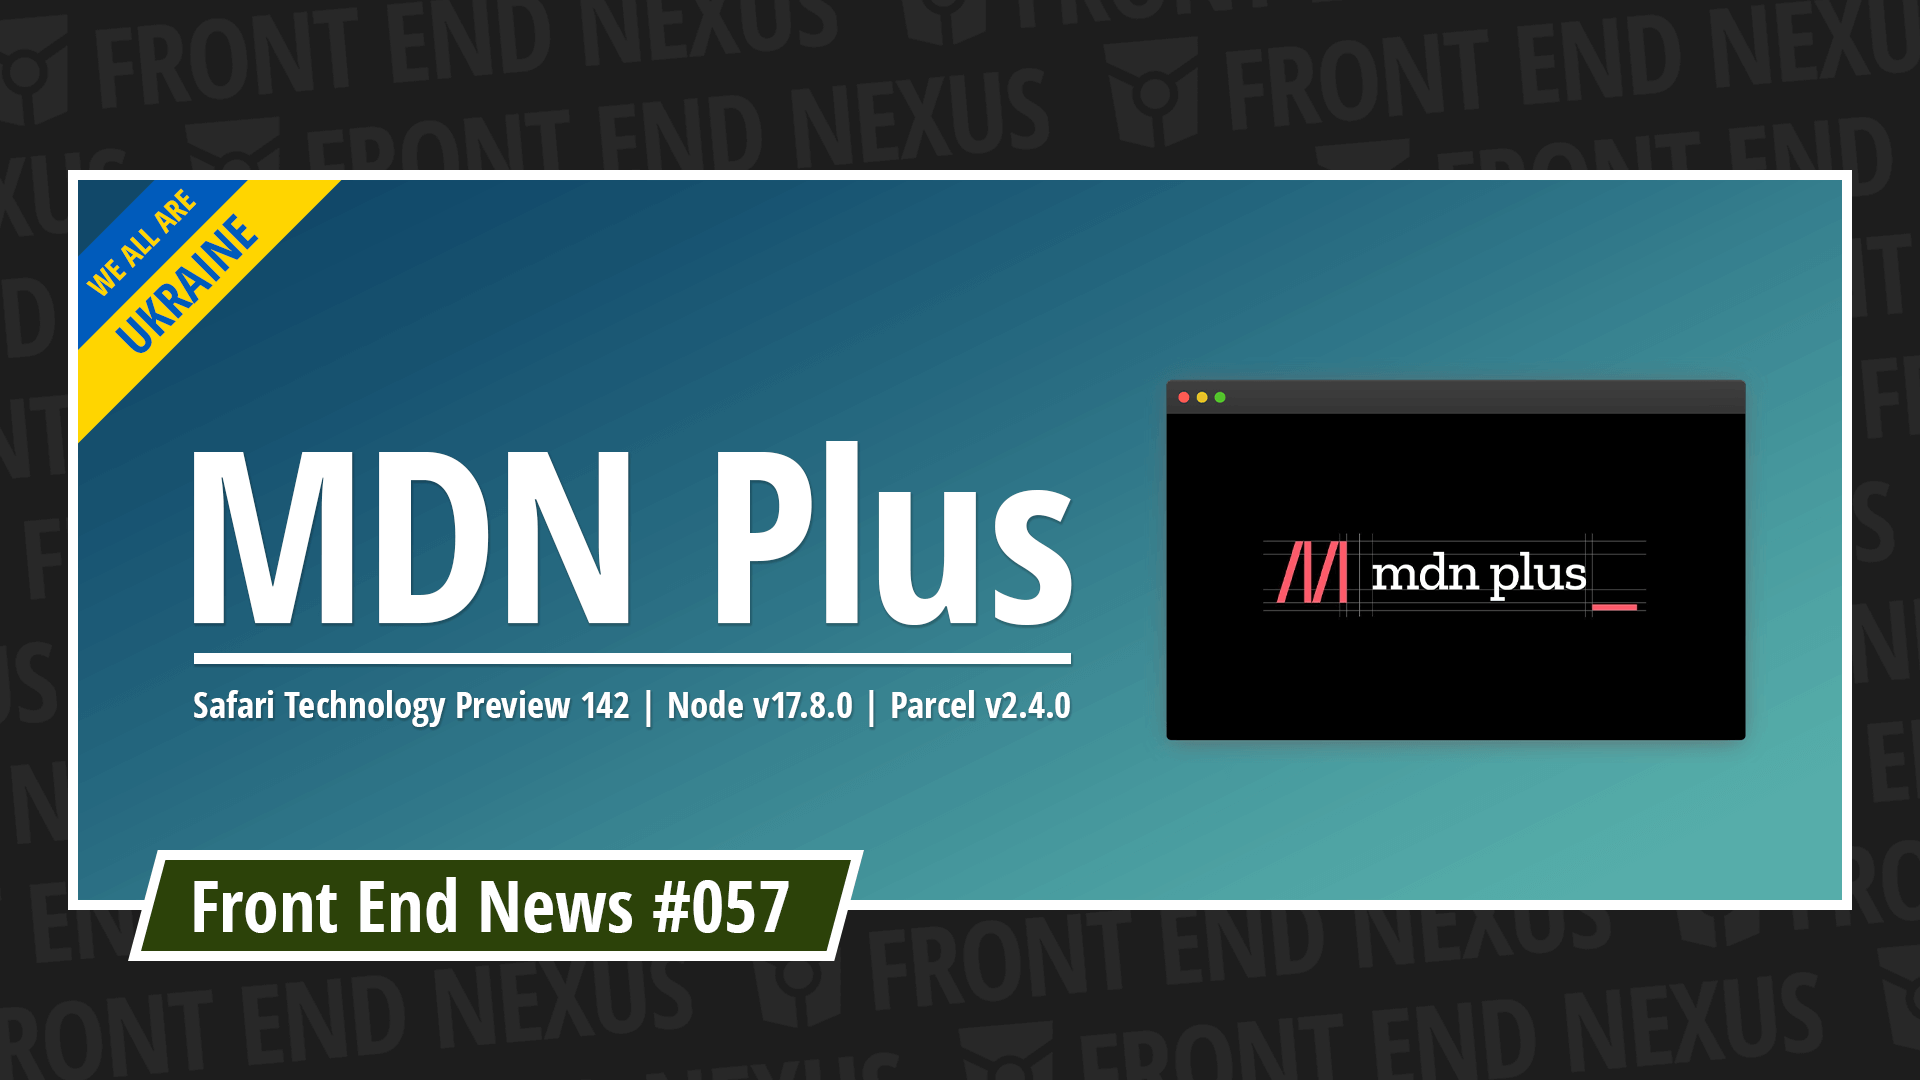 MDN Plus, Safari Technology Preview 142, Node v17.8.0, Parcel v2.4.0, and more | Front End News #057